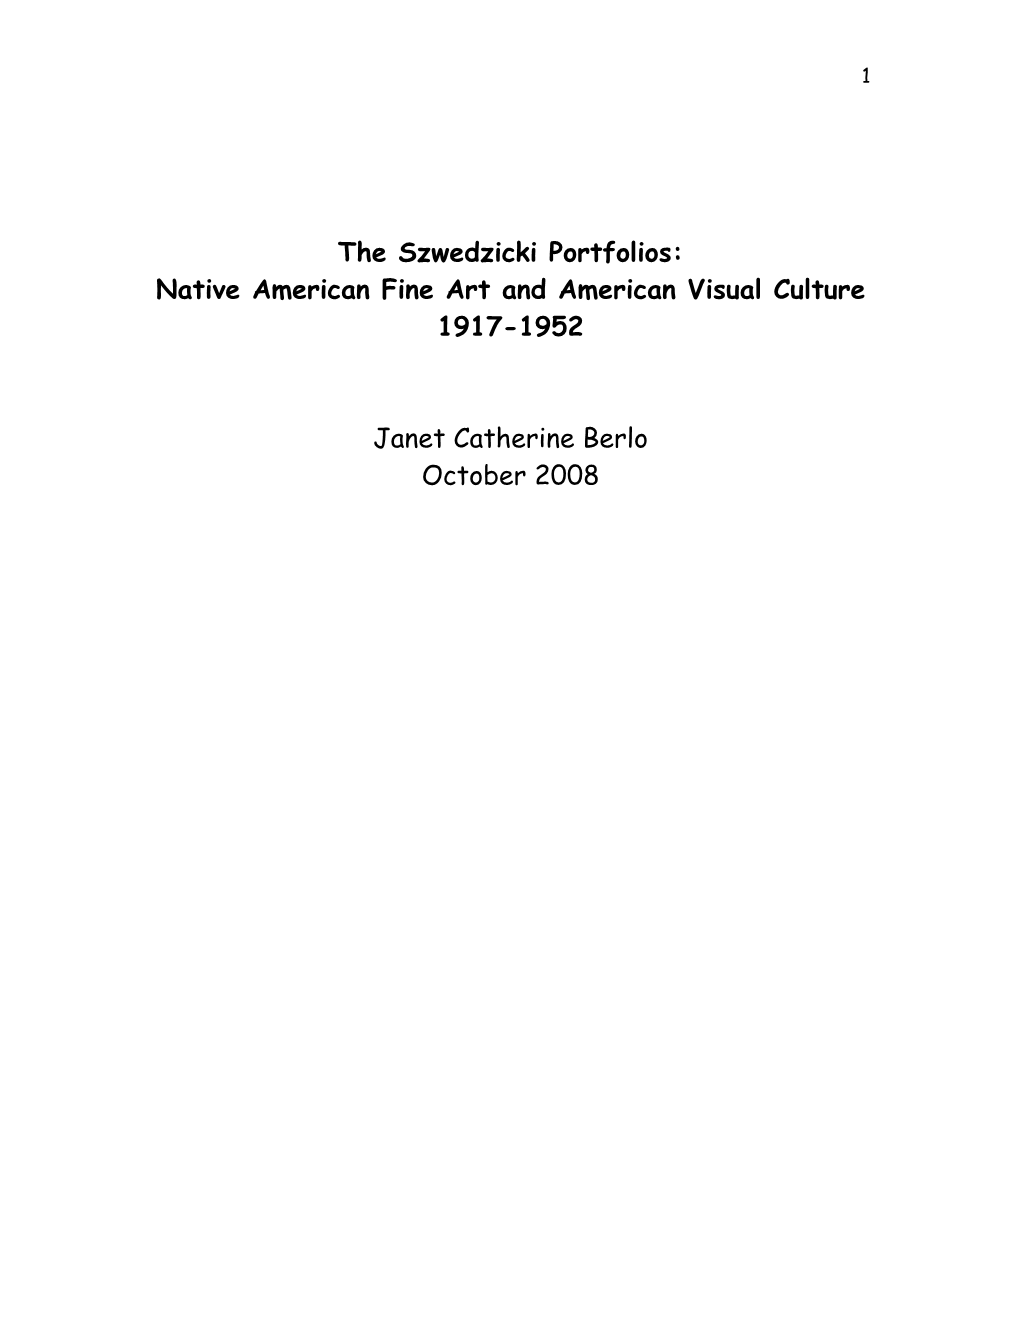 The Szwedzicki Portfolios: Native American Fine Art and American Visual Culture 1917-1952